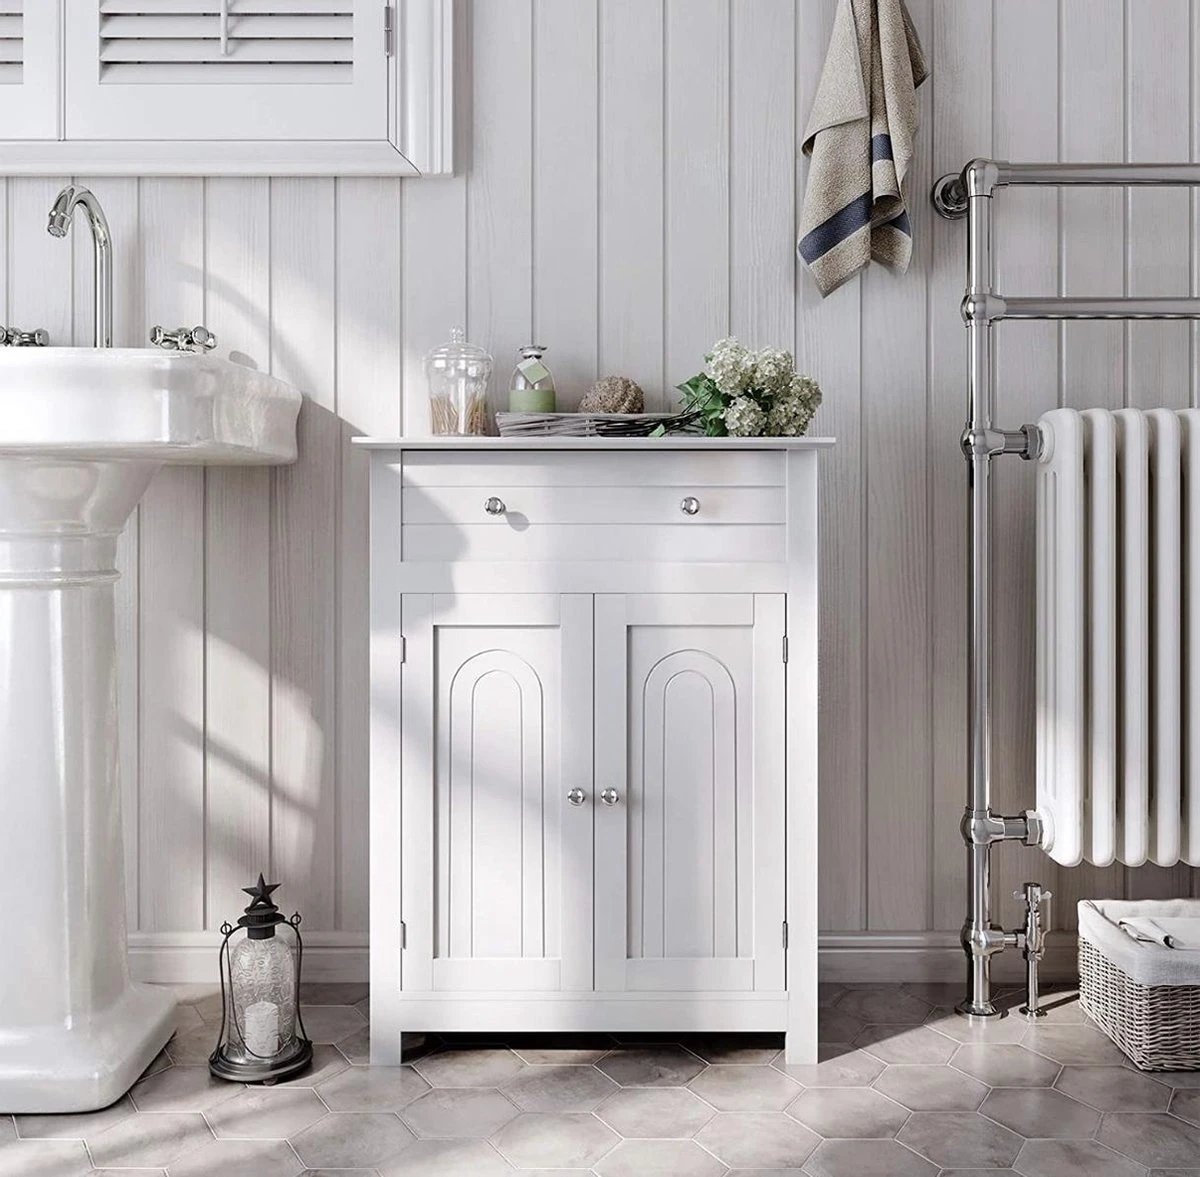 ZAZA Home badkamermeubel, badkamermeubel met lade en verstelbare plank, landelijke keukenkast, houten opbergkast, wit, 60 x 80 x 30 cm (B x D), BBC61WT - SimpleDeal.nl